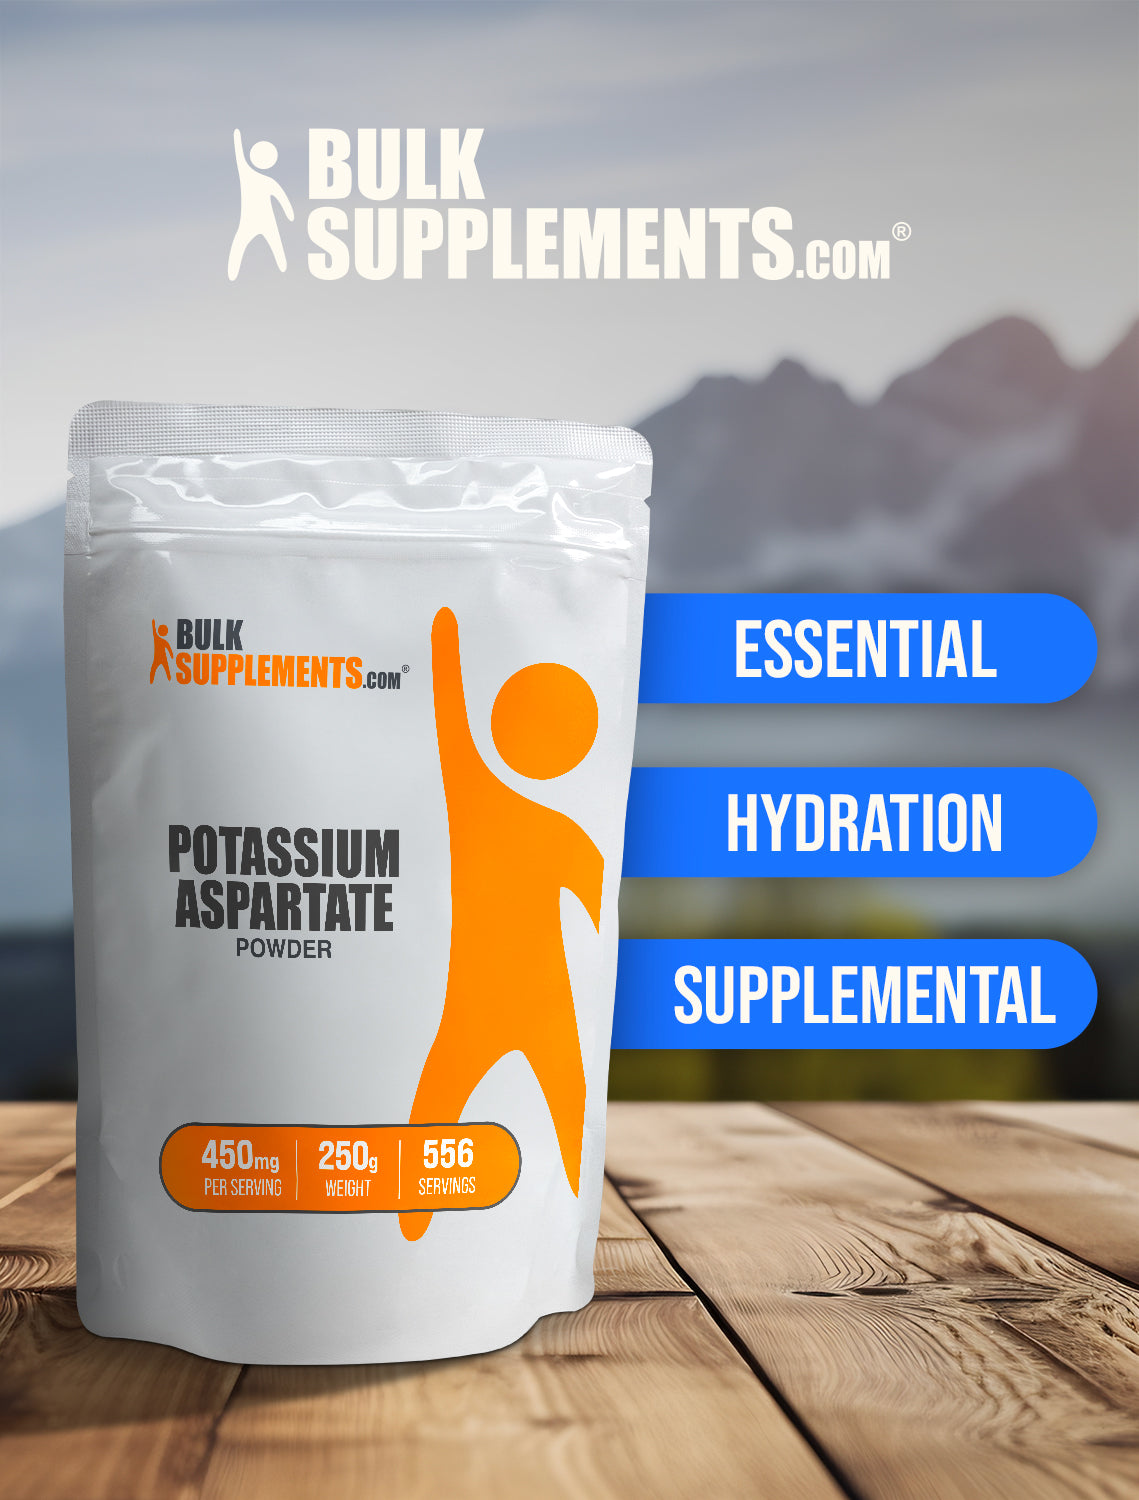 Potassium Aspartate powder keyword image 250g